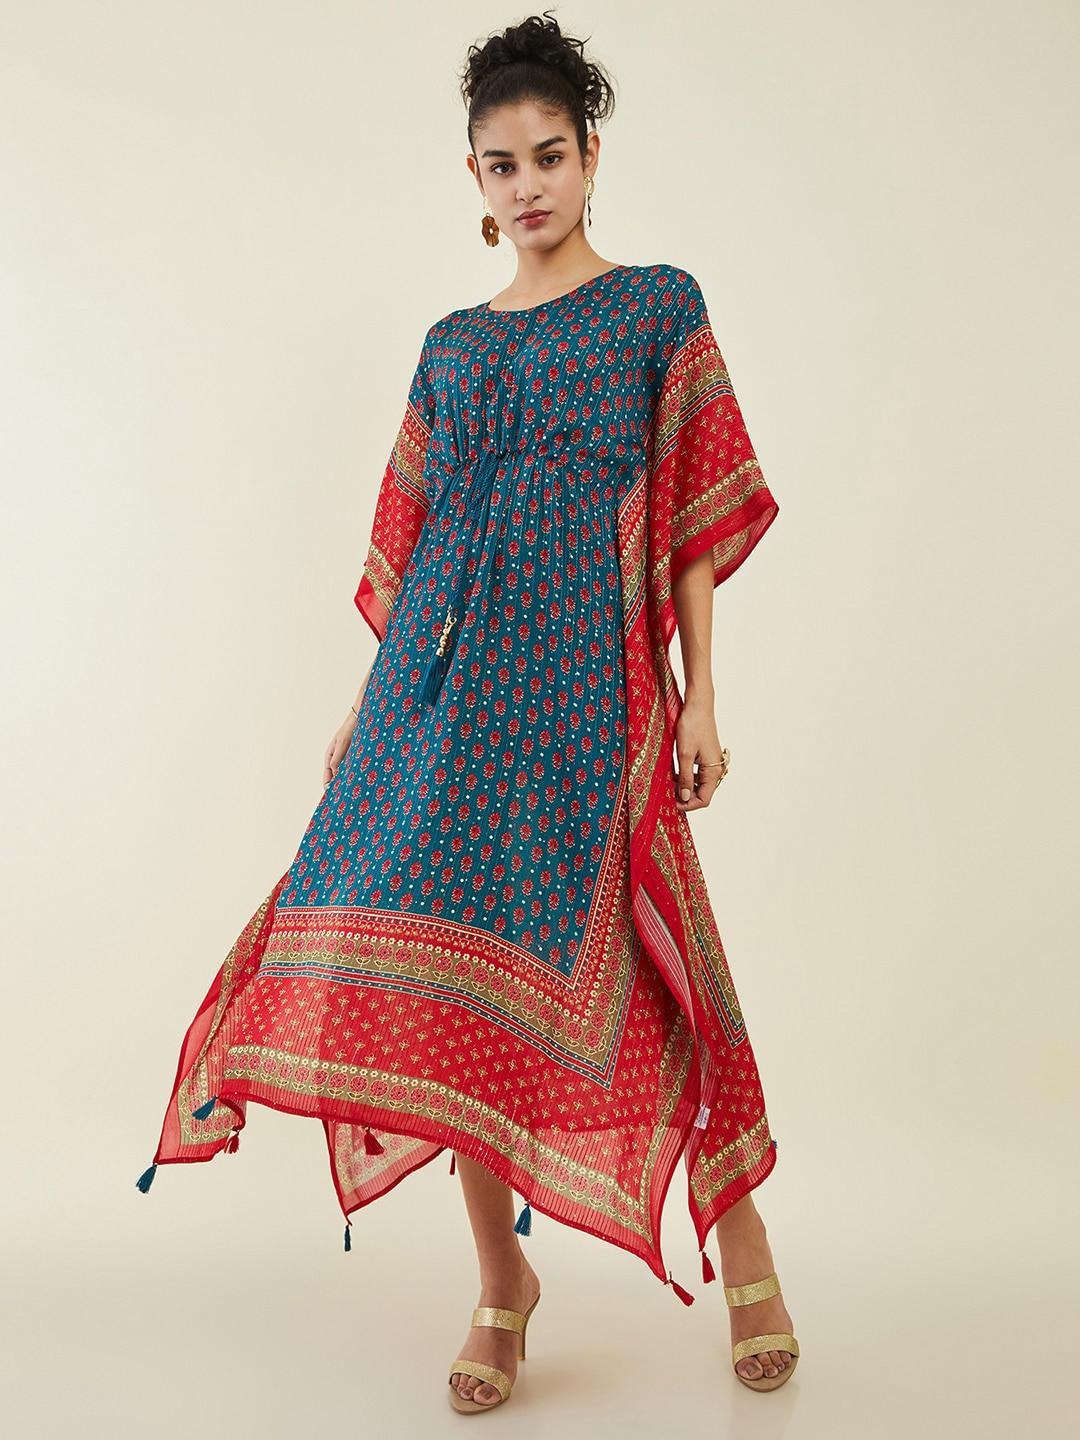 soch-teal-blue-ethnic-motifs-printed-sequined-kaftan-midi-ethnic-dress